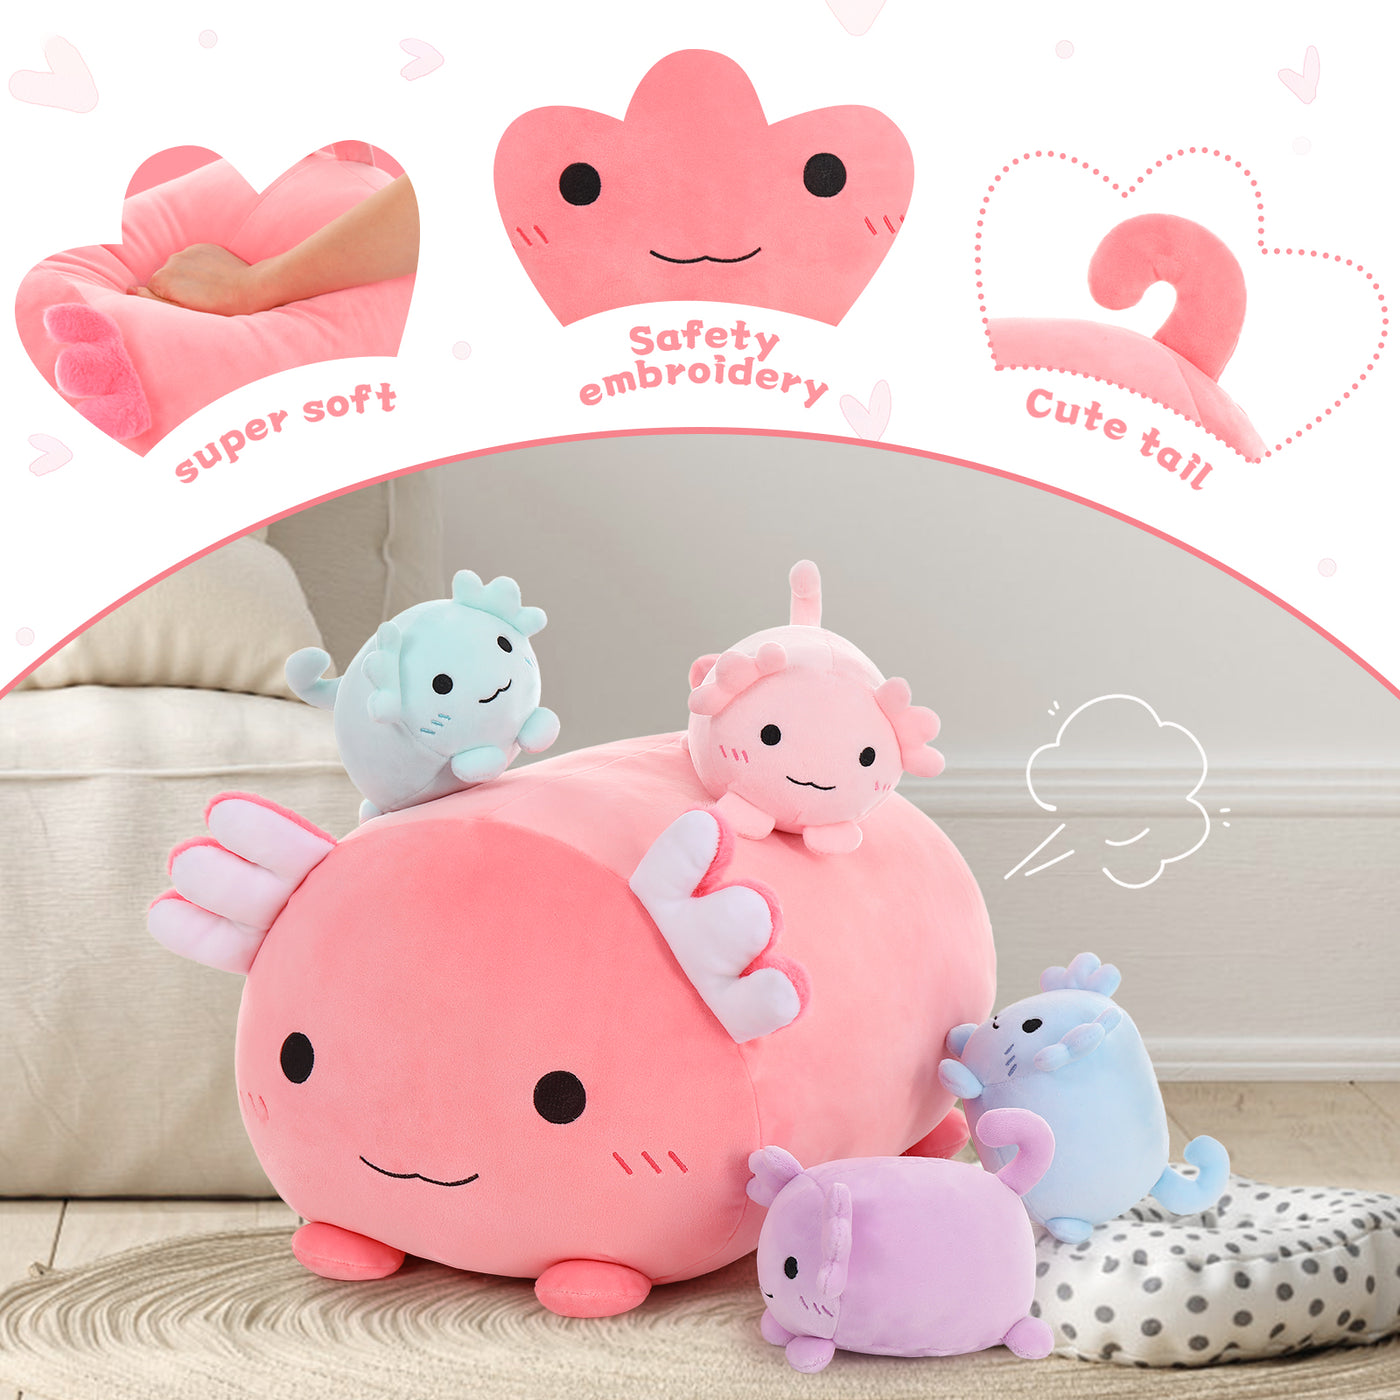 Axolotl Plush Toy Set, Pink, 16.5 Inches - MorisMos Stuffed Animals